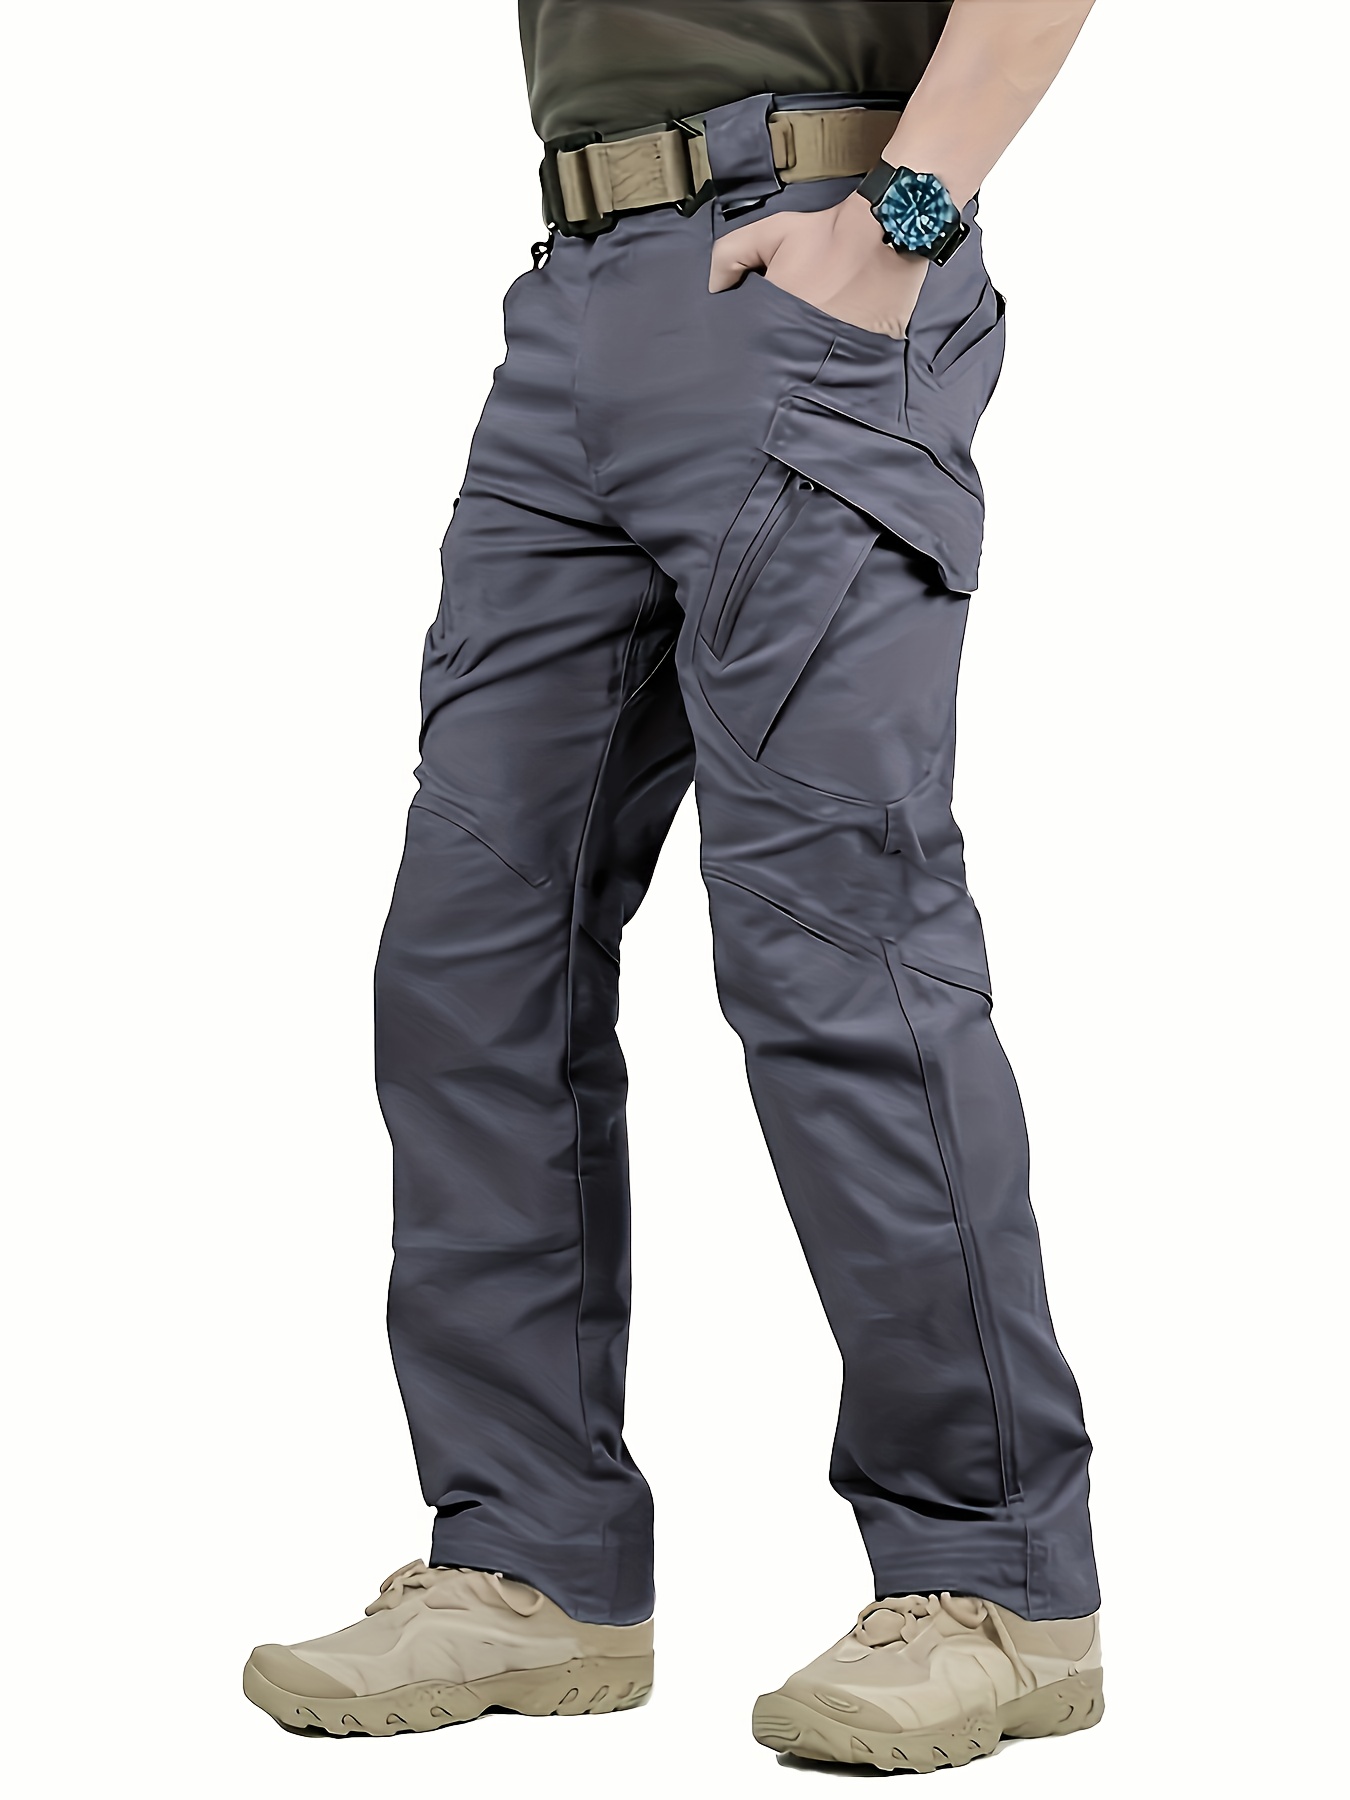 Pantalones Cargo para hombre, pantalones militares sueltos con